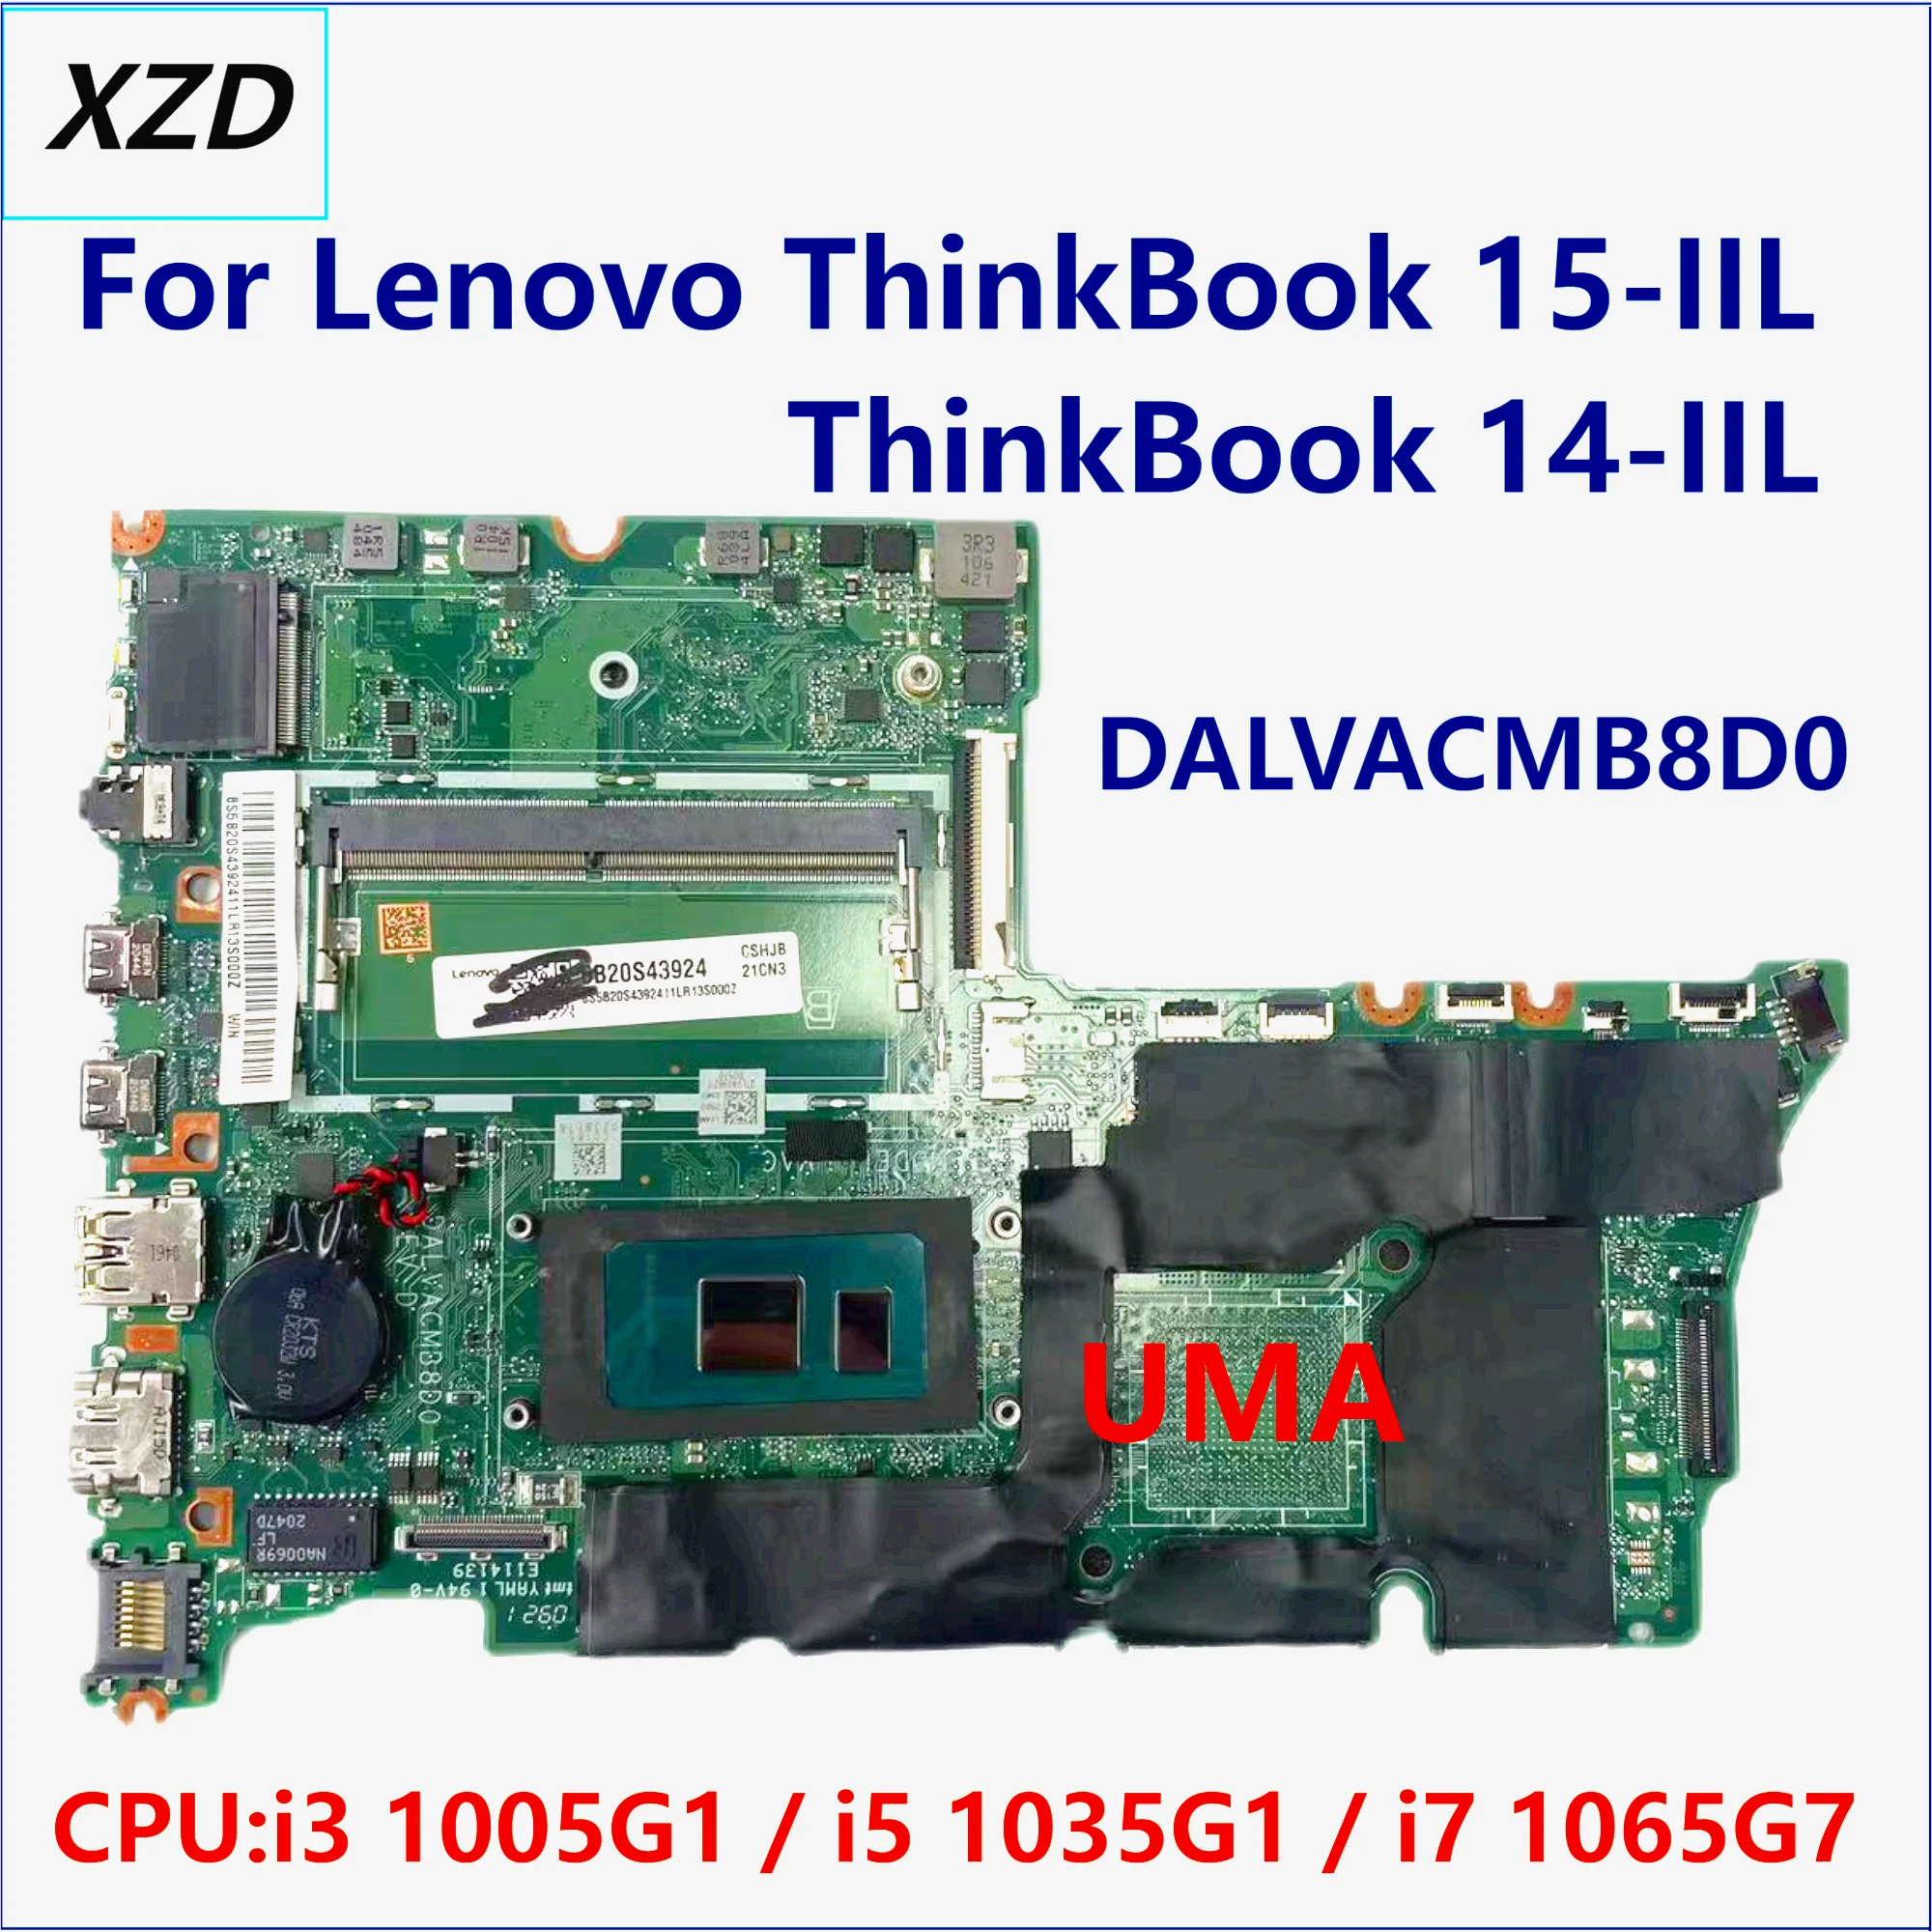 

DALVACMB8D0 Mainboard For Lenovo ThinkBook 15-IIL ThinkBook 14-IIL Laptop Motherboard With I3-1005g1 UMA 100% TEST OK